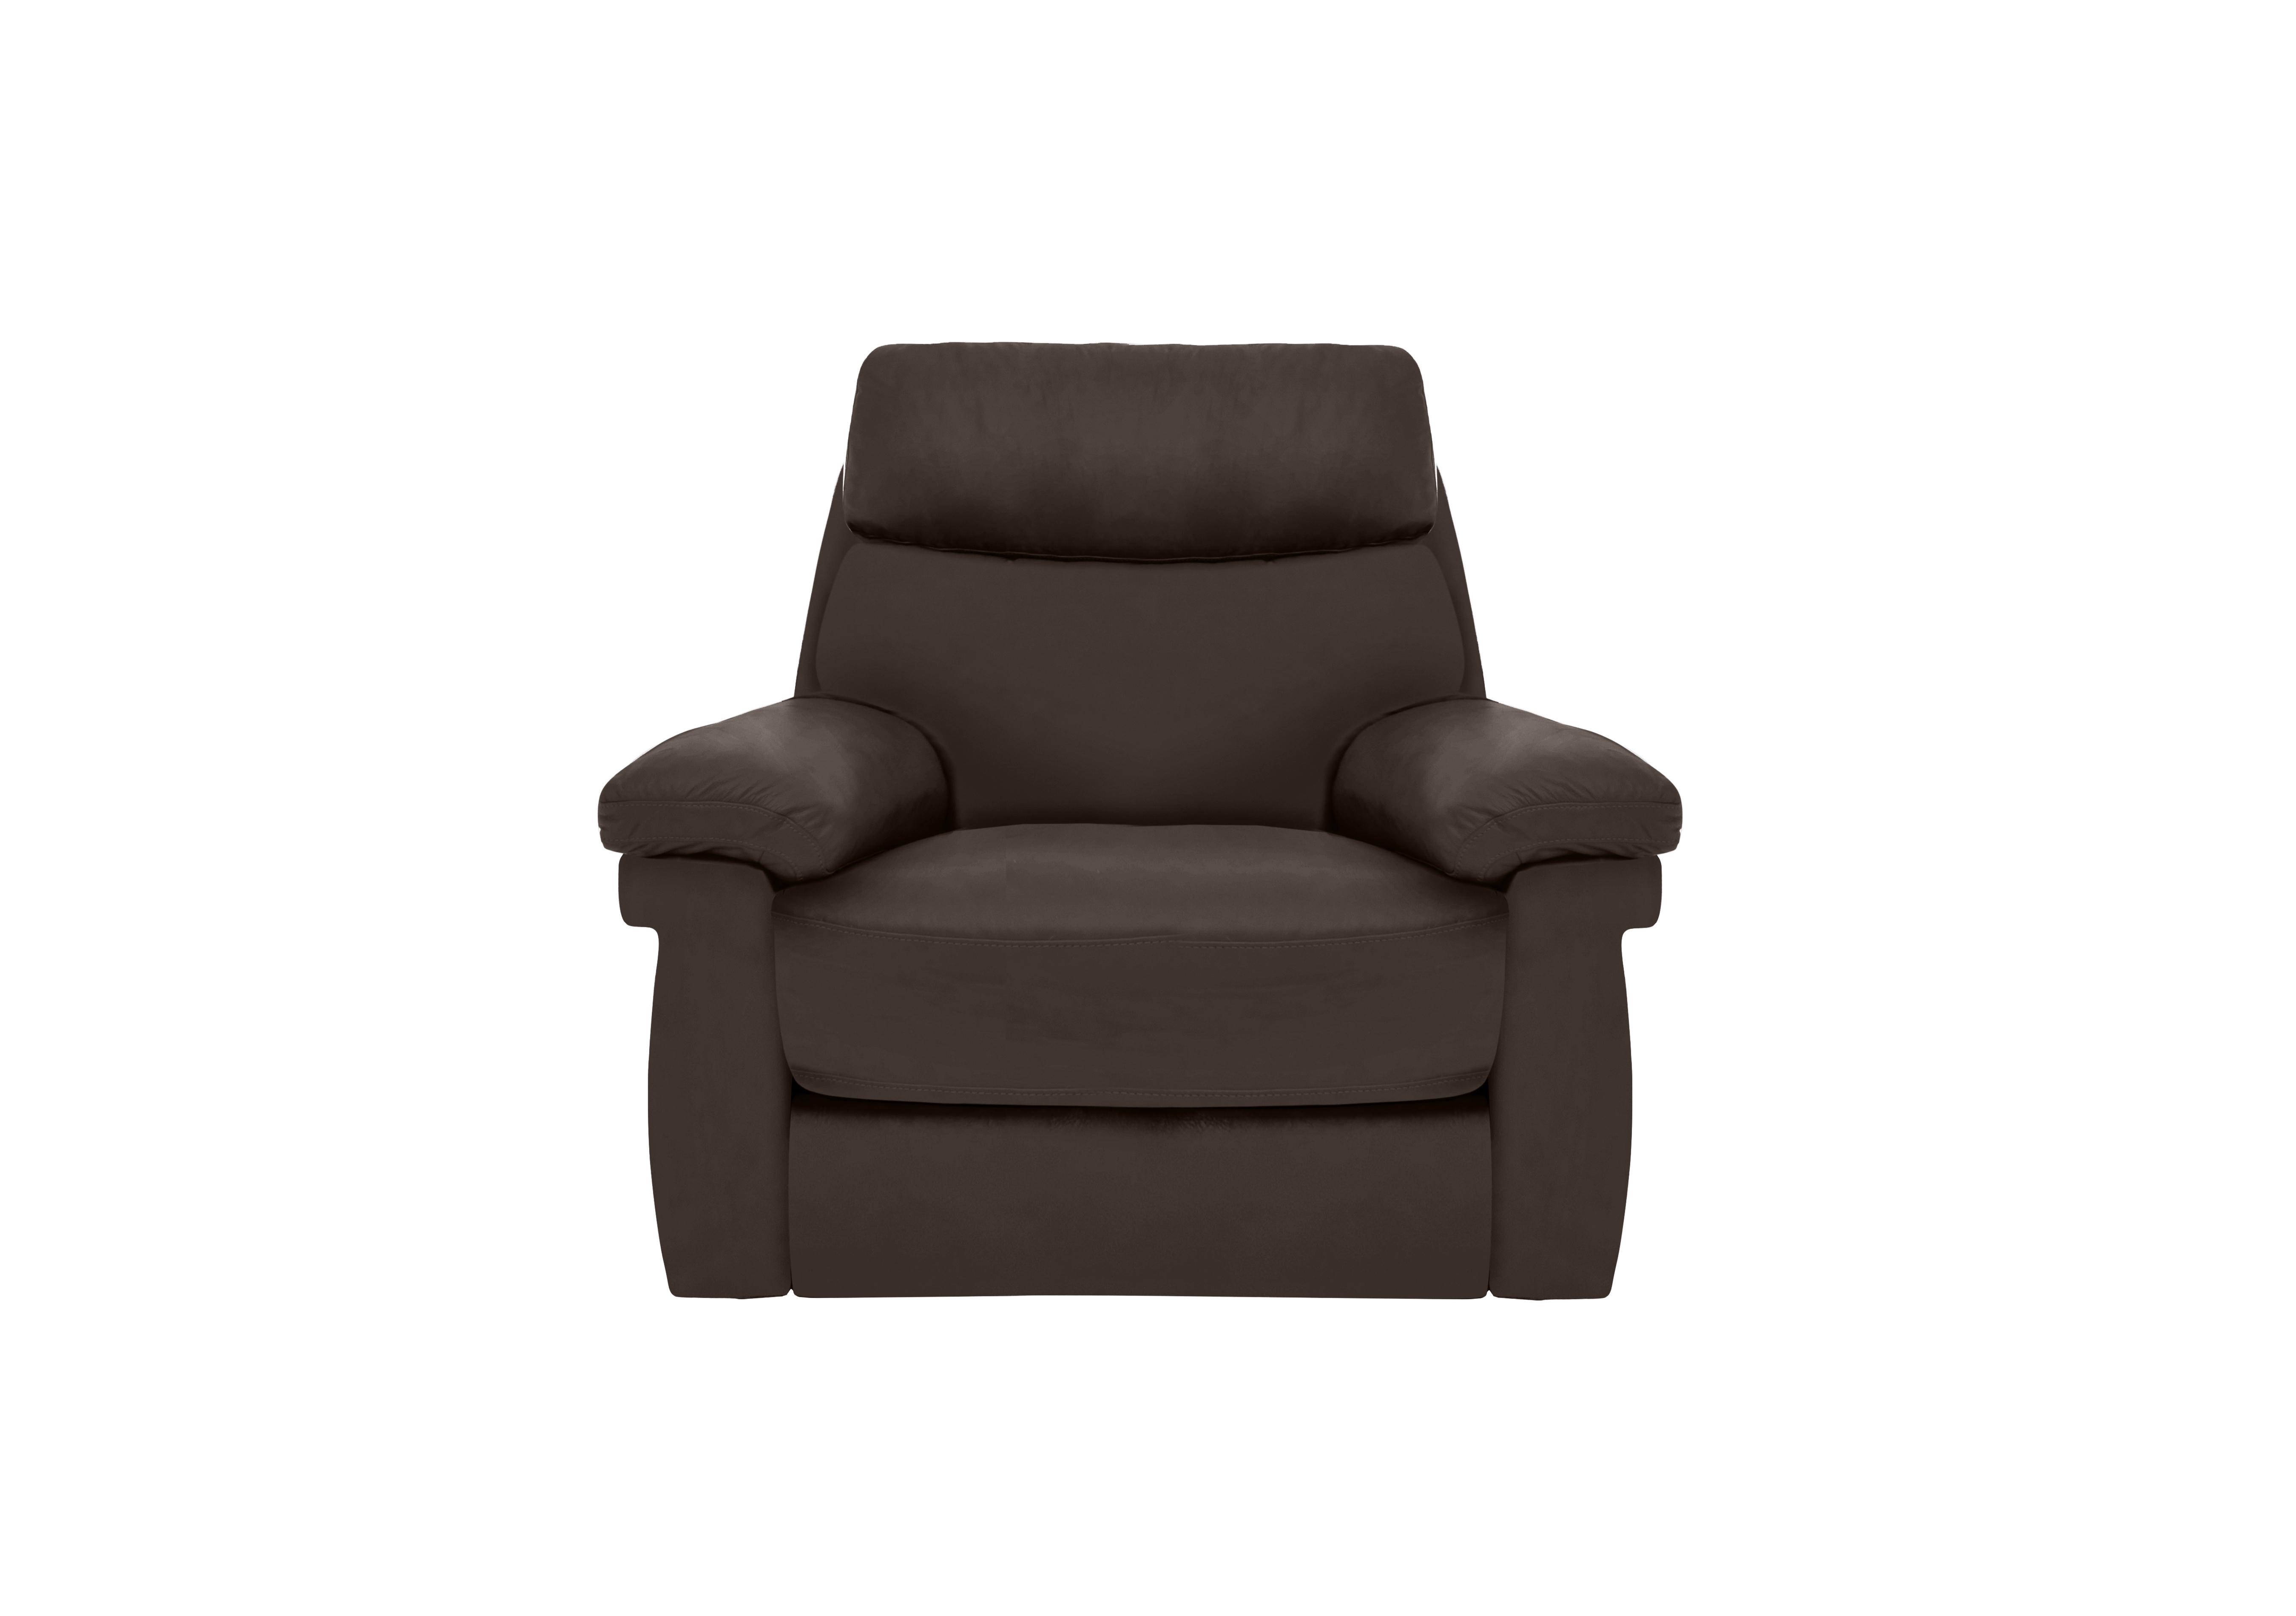 Serene Leather Power Recliner Chair with Power Headrest in Bx-037c Walnut on Furniture Village